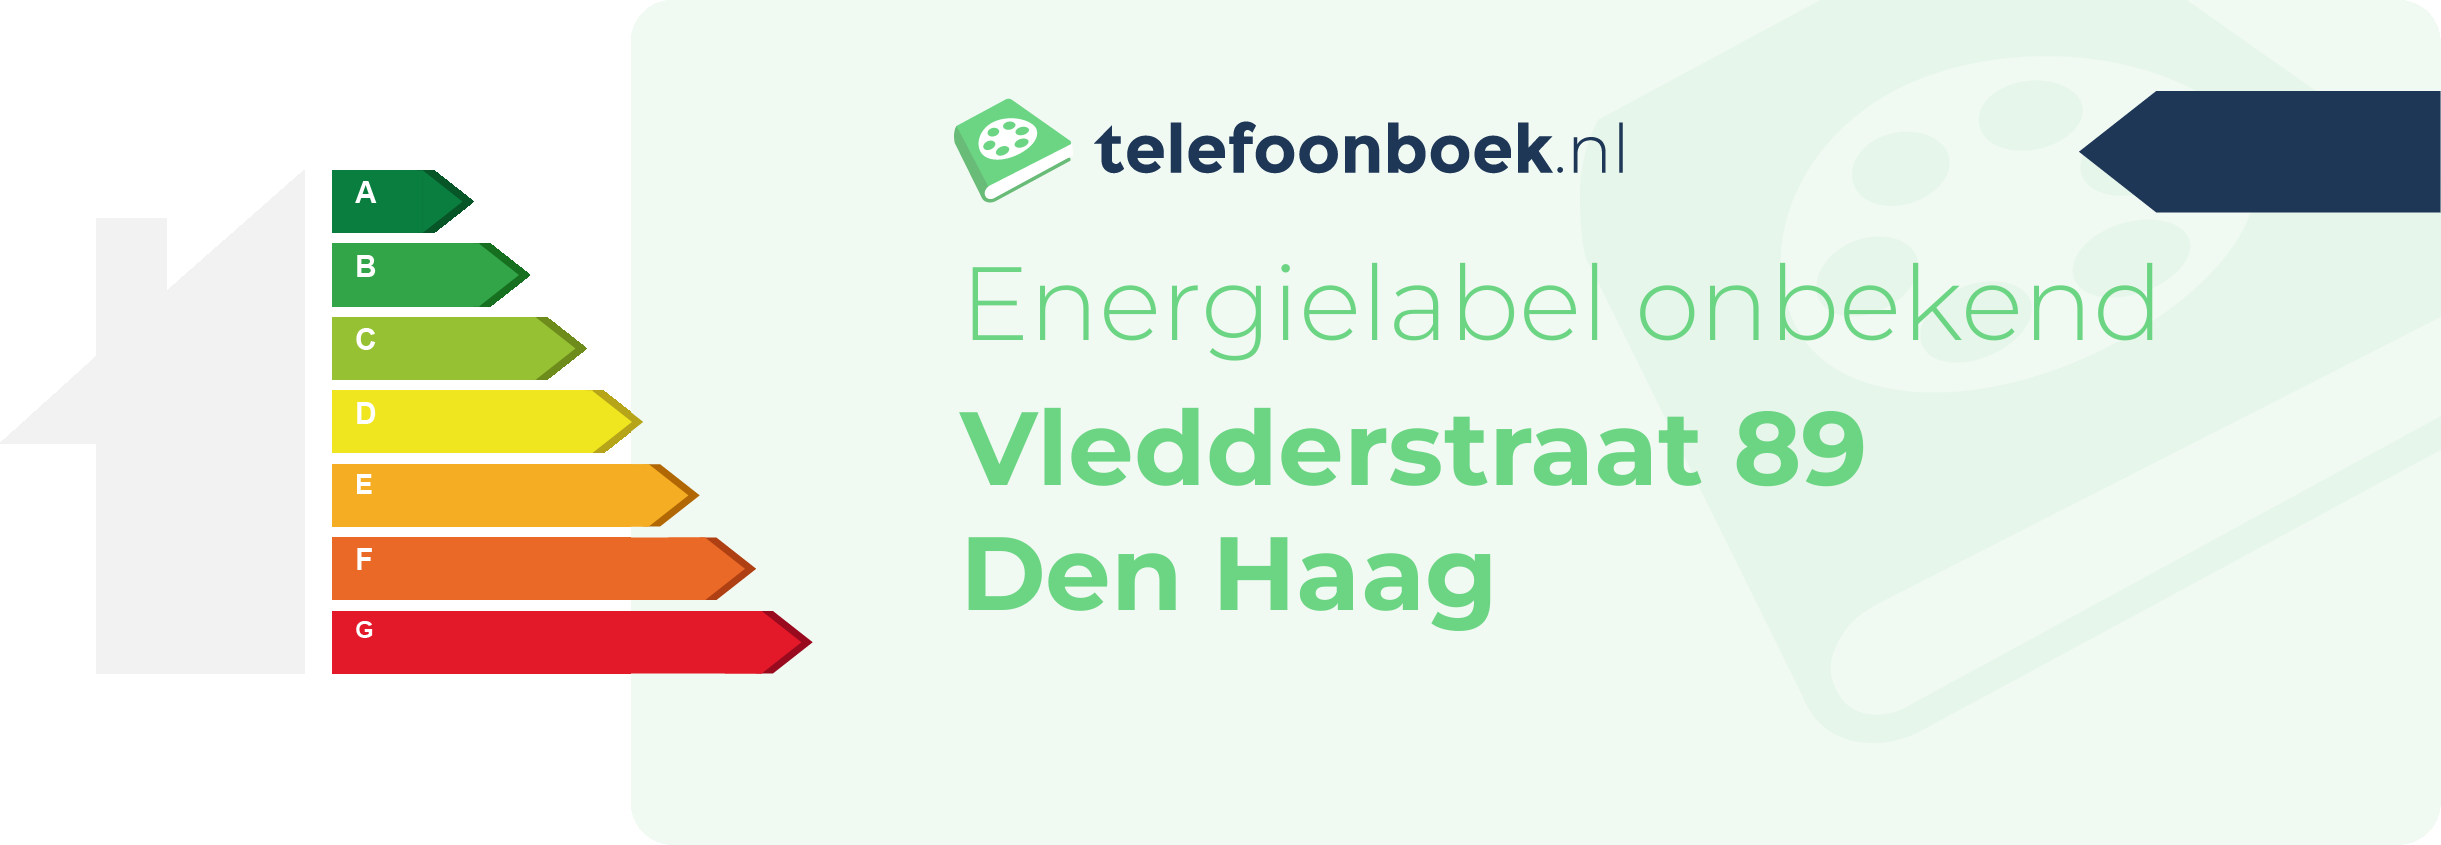 Energielabel Vledderstraat 89 Den Haag